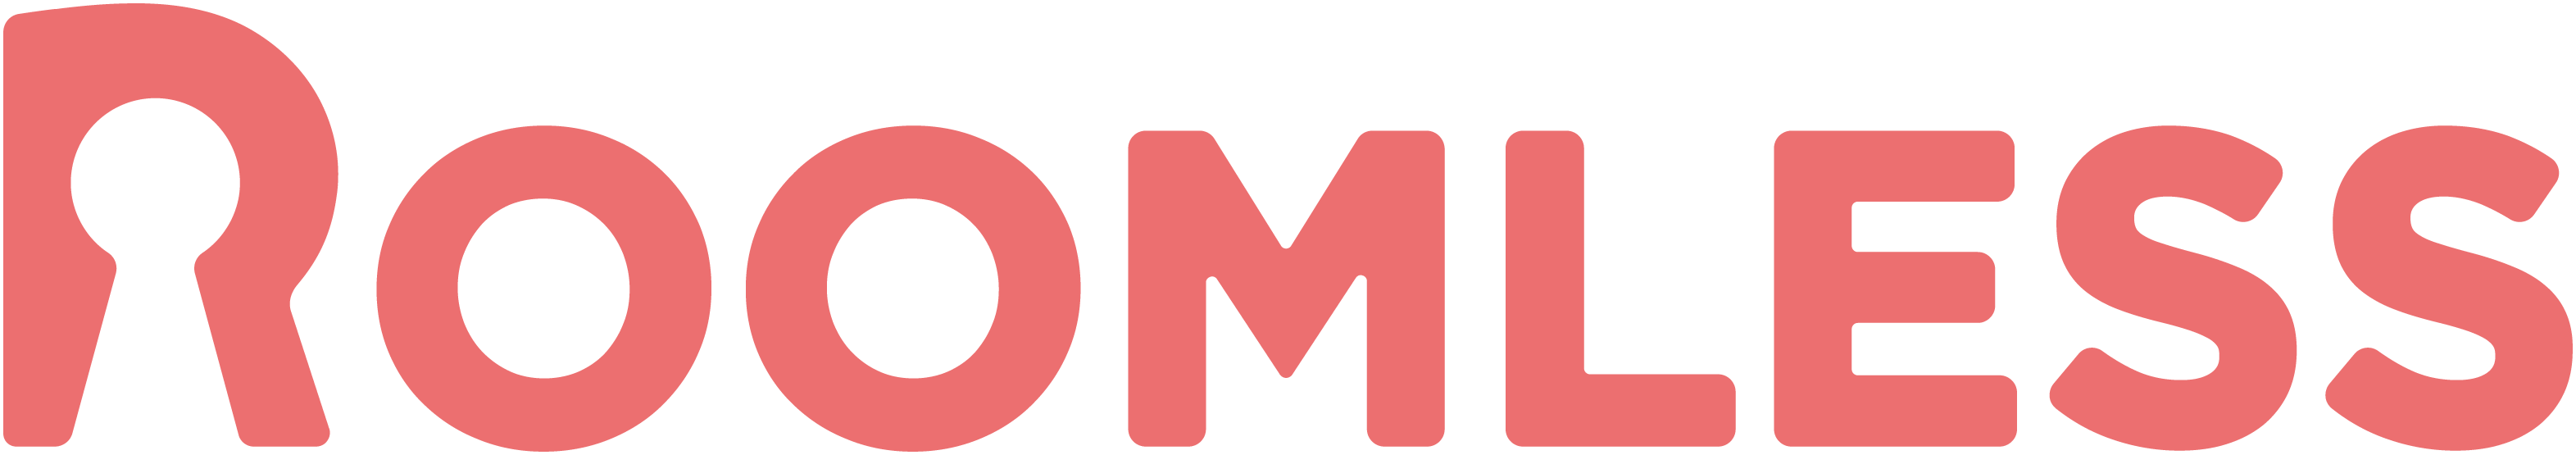 Logo Roomless